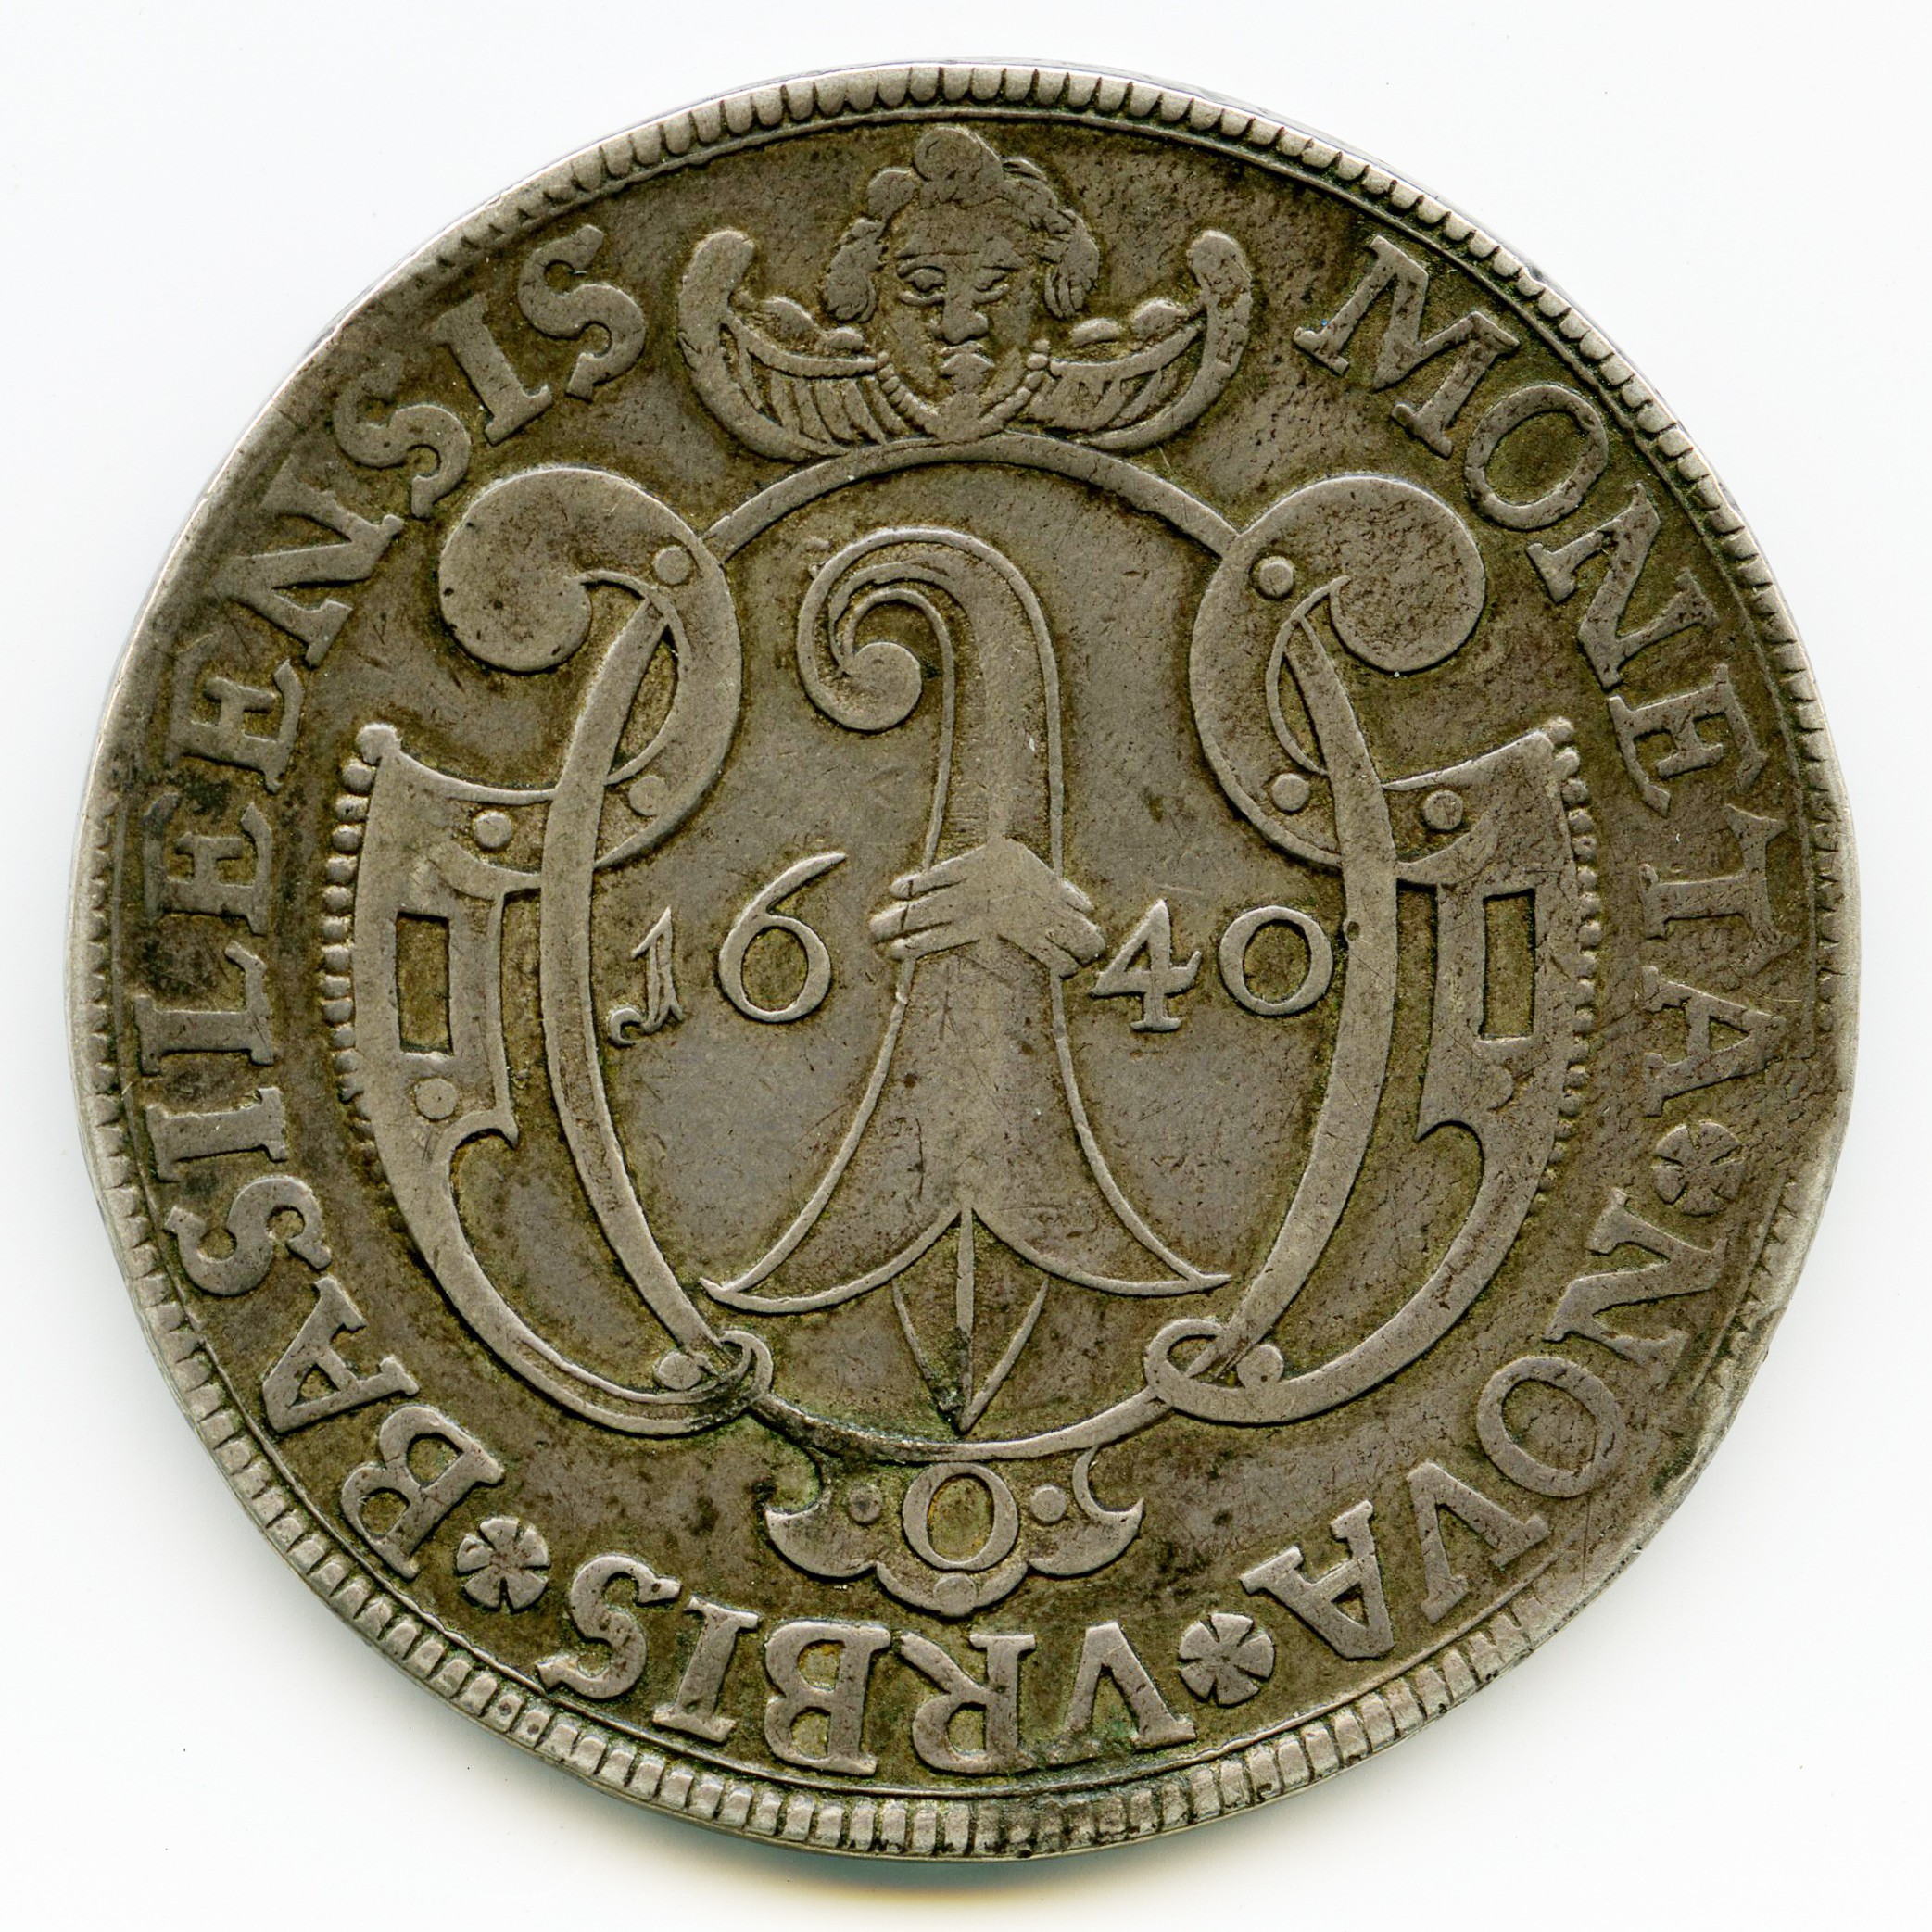 Suisse - Taler - 1640 avers